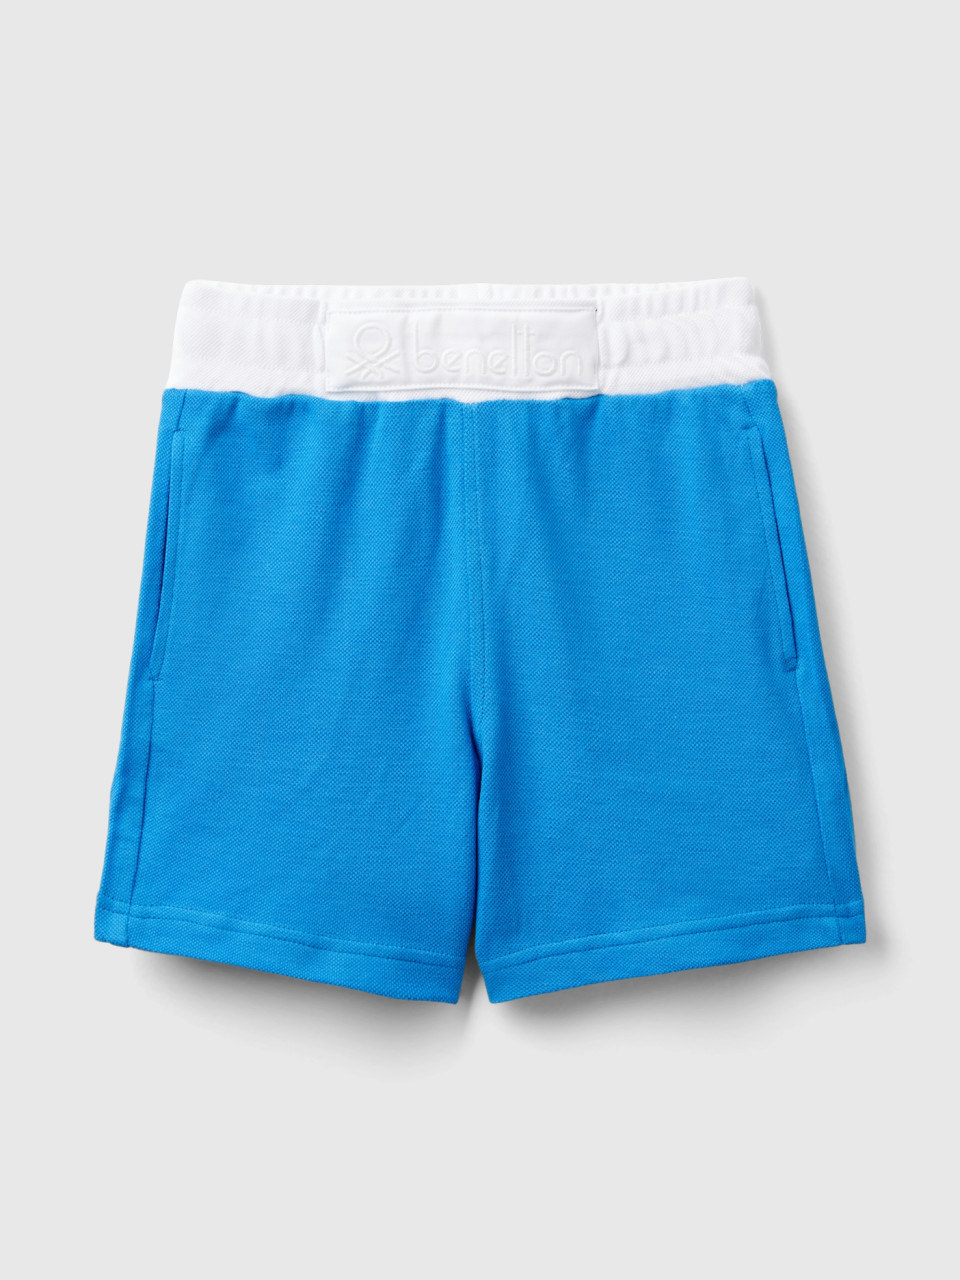 Benetton, Shorts With Drawstring, Blue, Kids